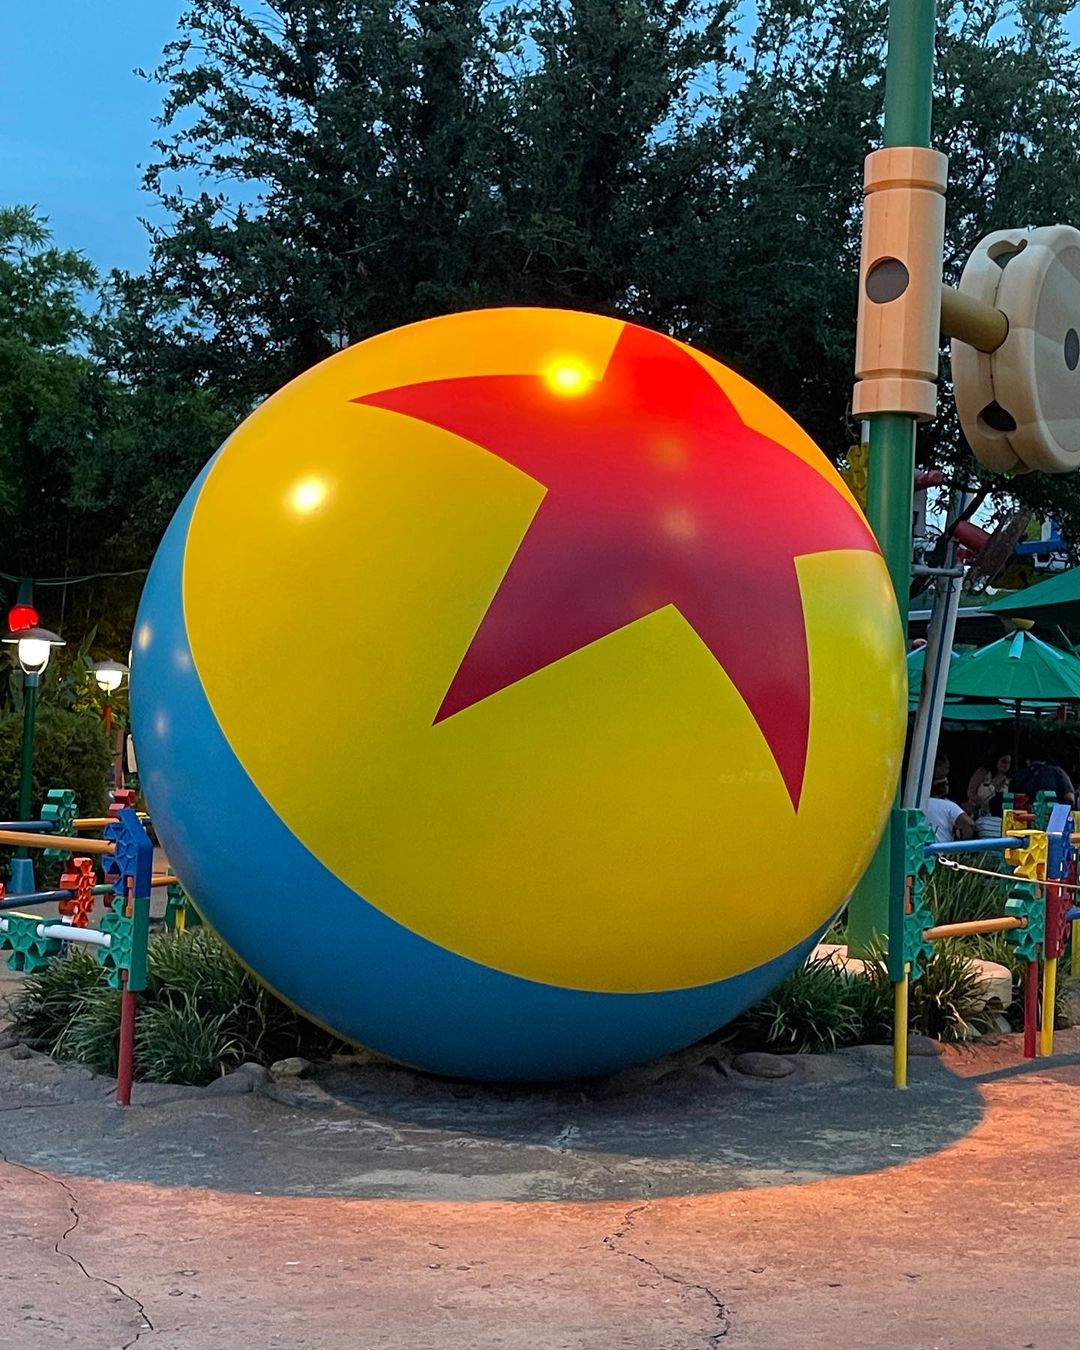 Pixar Ball at Toy Story Land